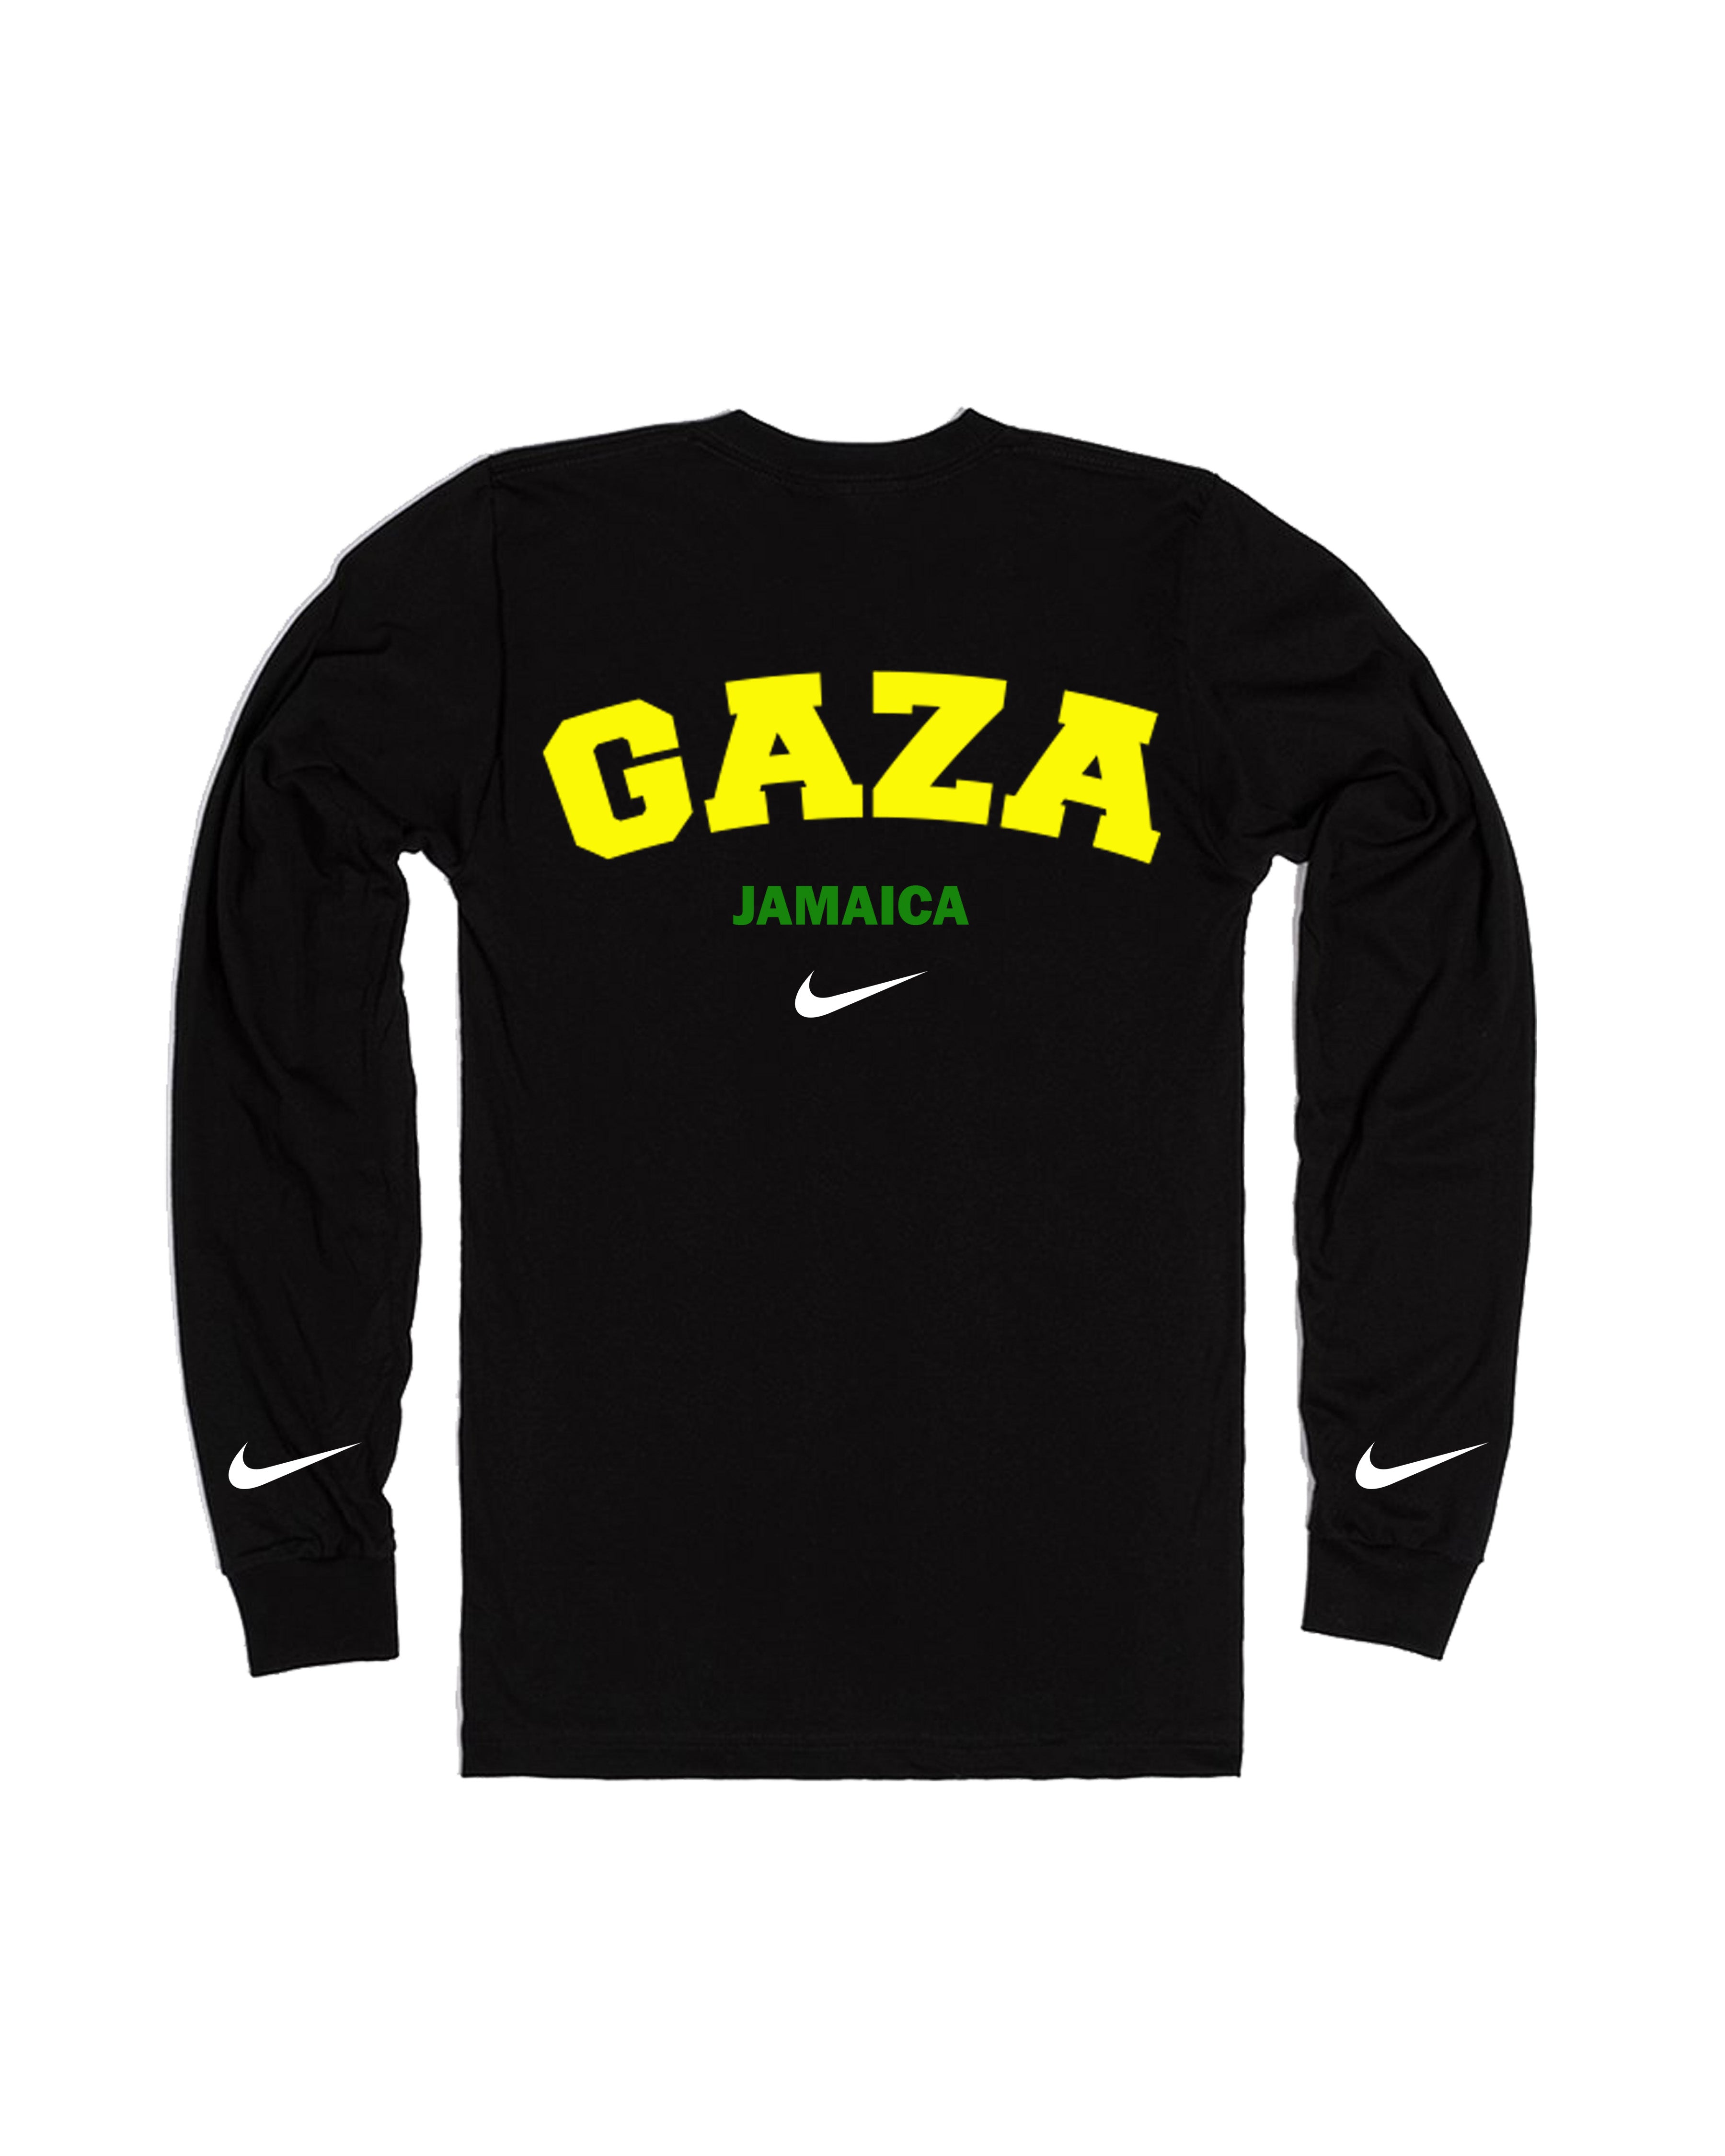 Gaza Jamaica Longsleeve